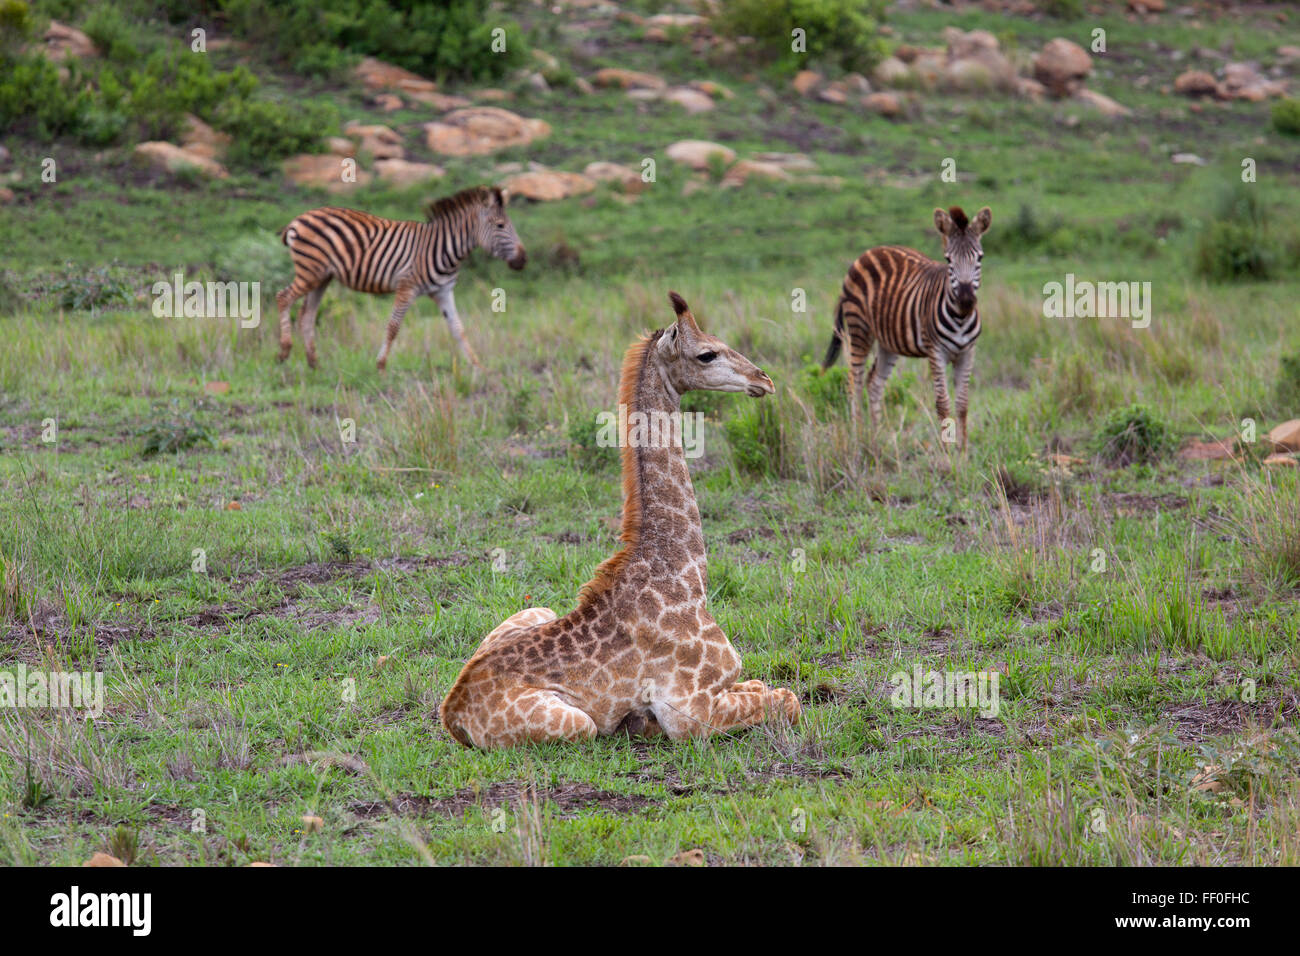 Young Cape Giraffe Giraffa camelopardalis resting and Zebras Stock Photo